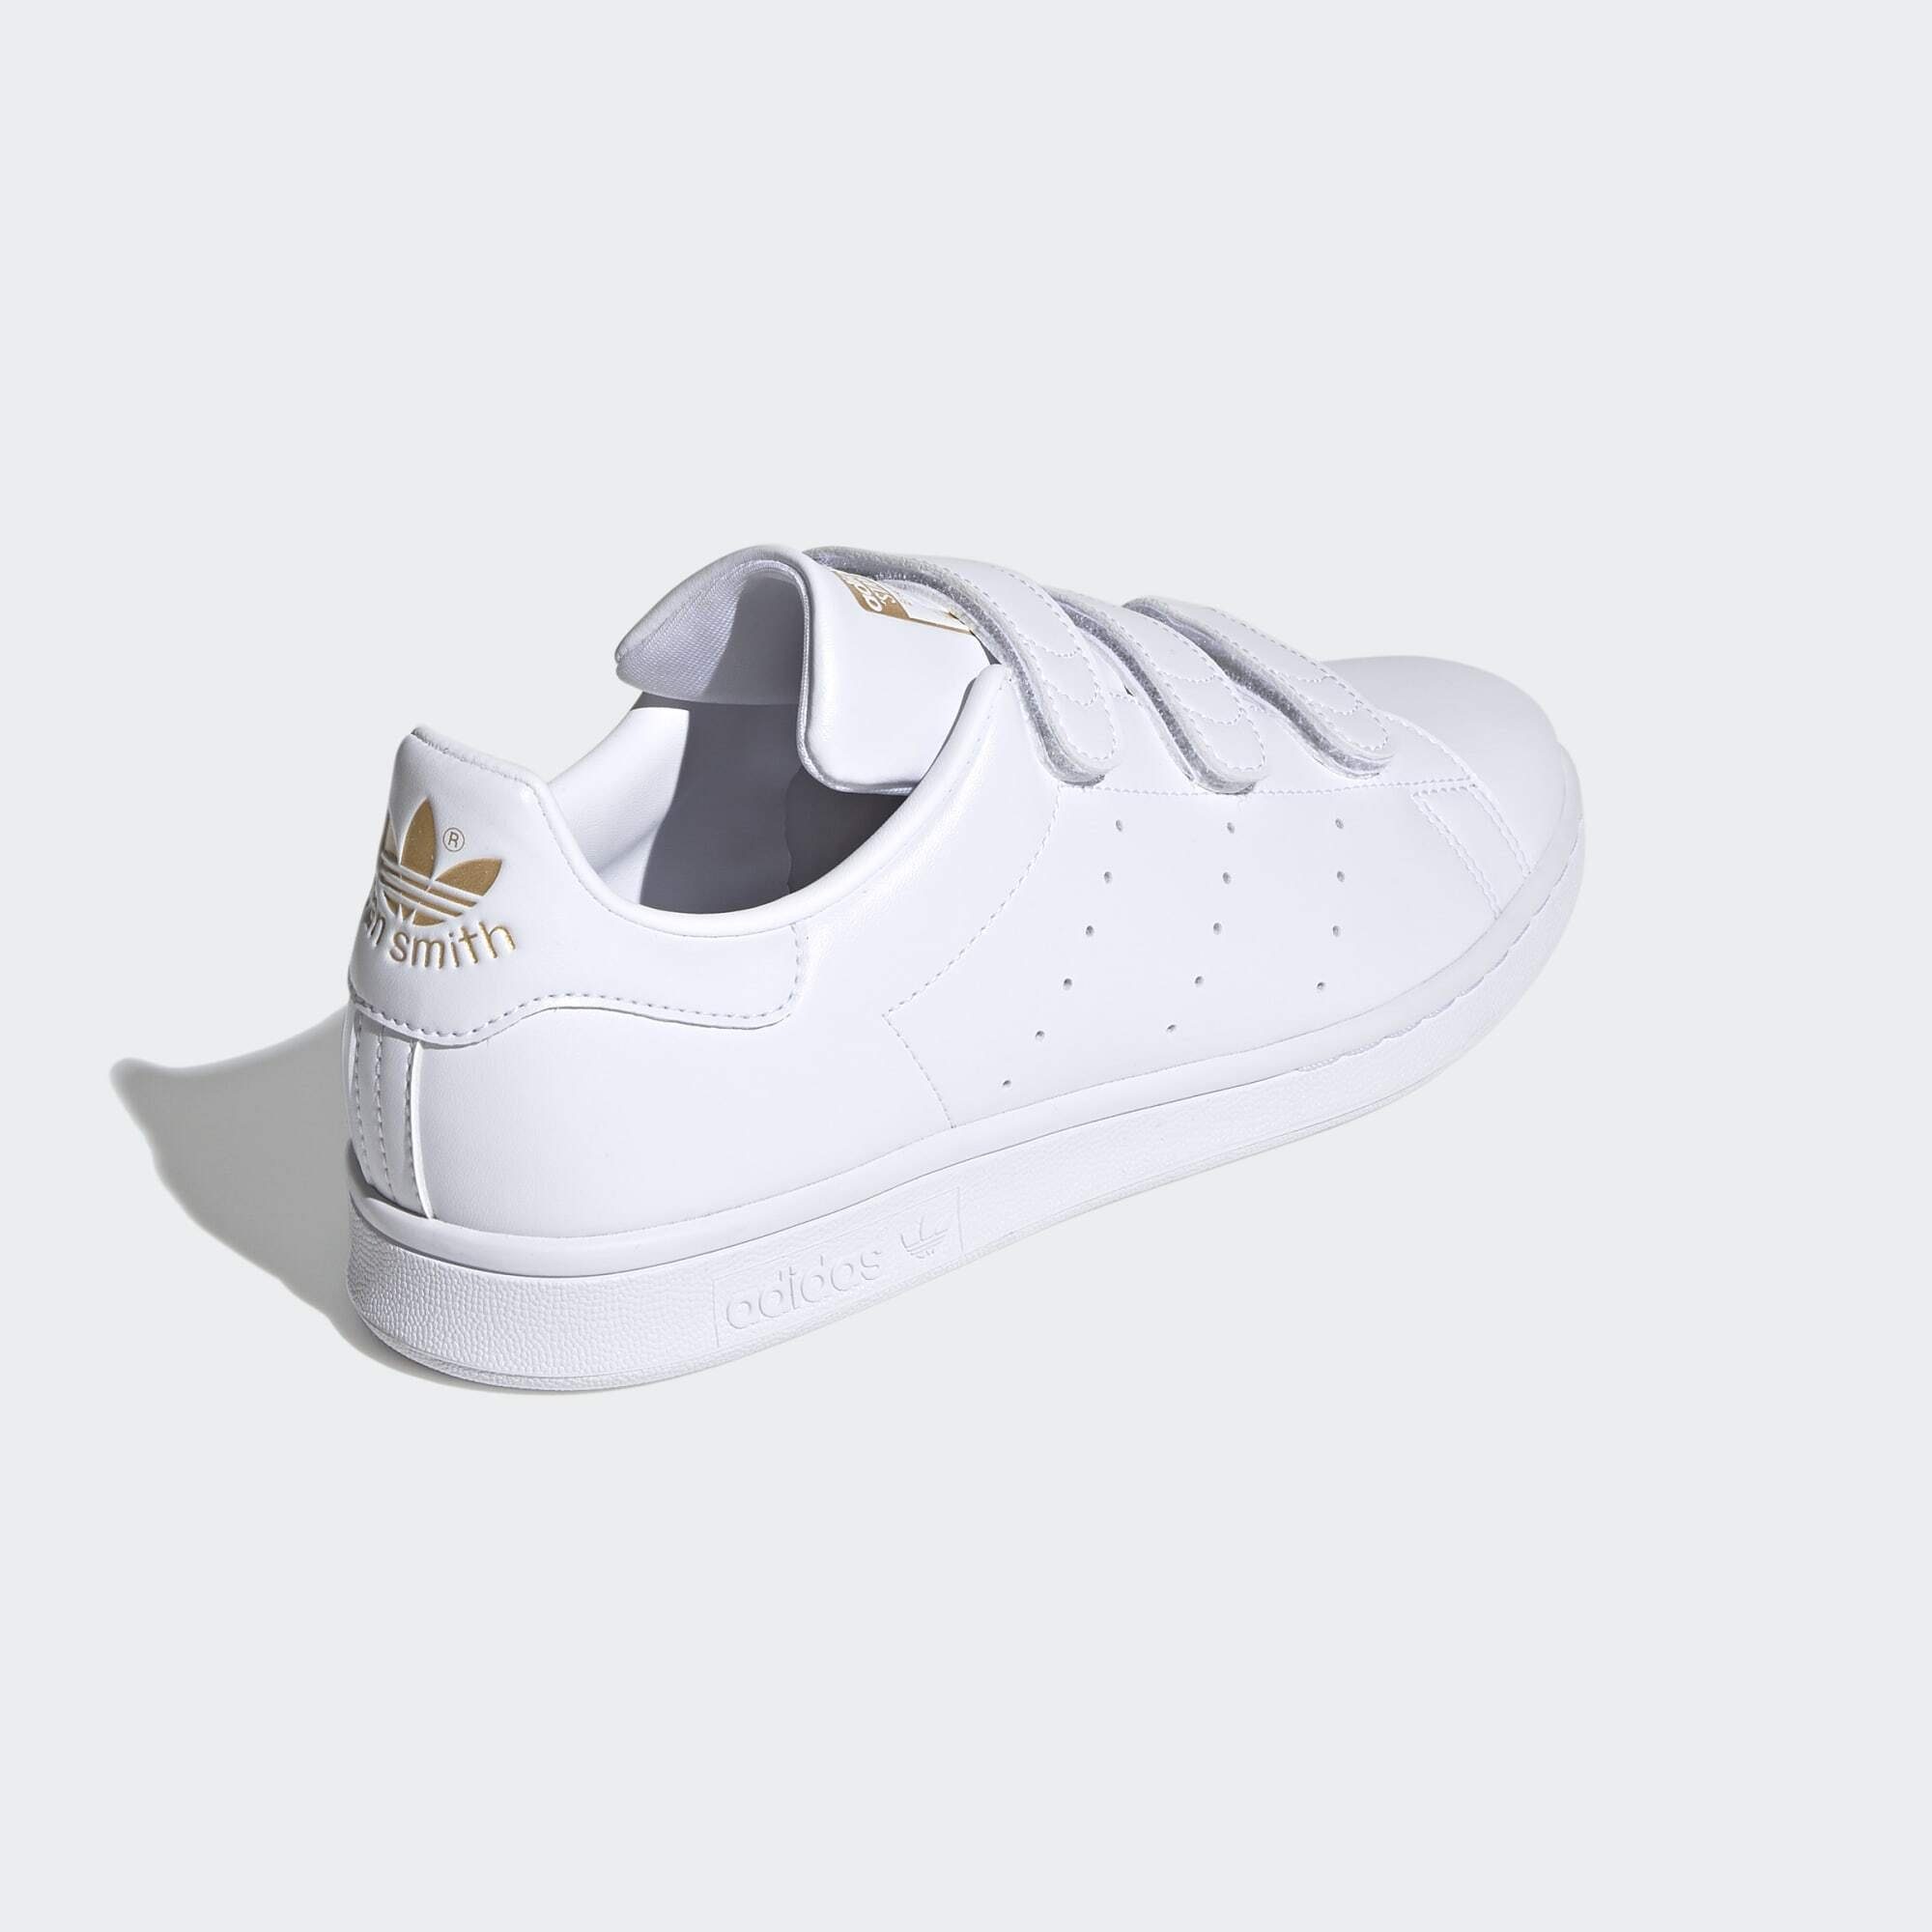 SMITH Gold STAN / Cloud White Sneaker White SCHUH / Metallic Cloud Originals adidas